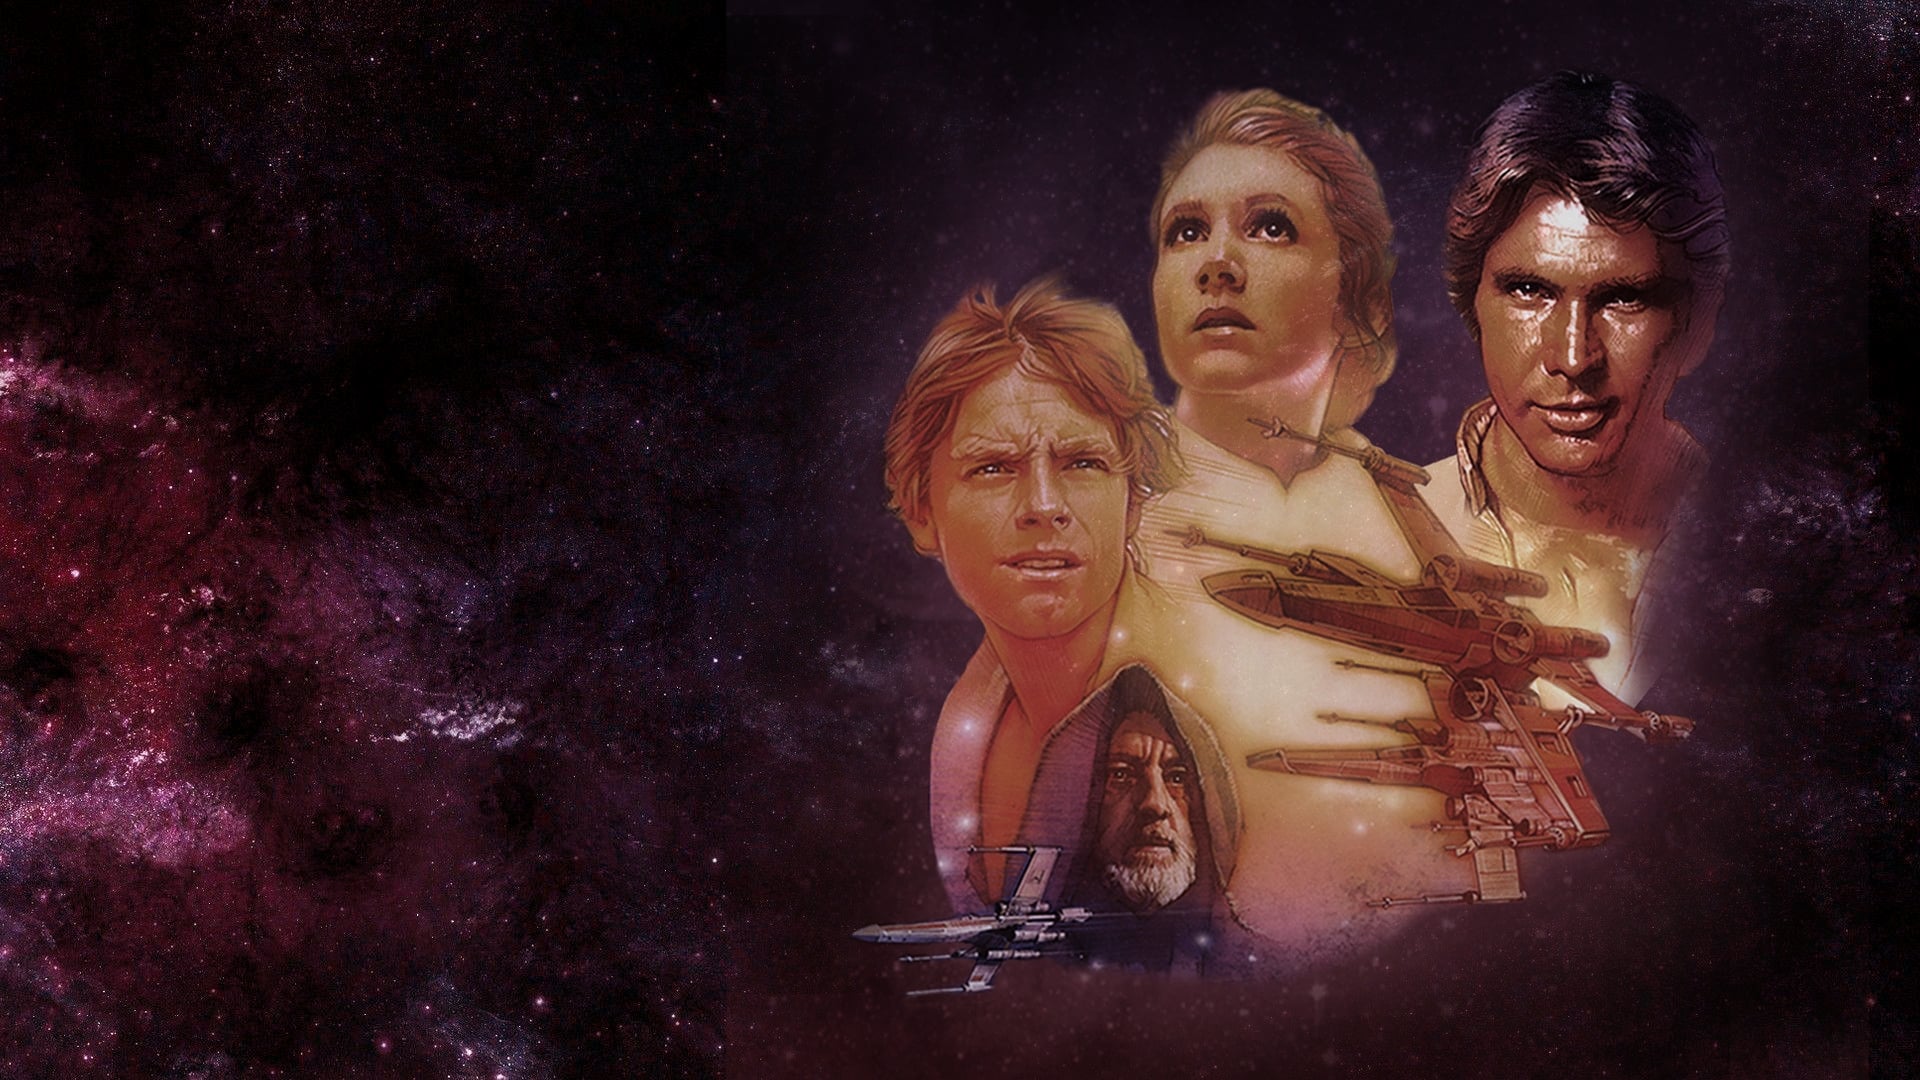 Image du film Star Wars Episode IV : un nouvel espoir r7dnndravrdi1acgh1nae0ncvstjpg